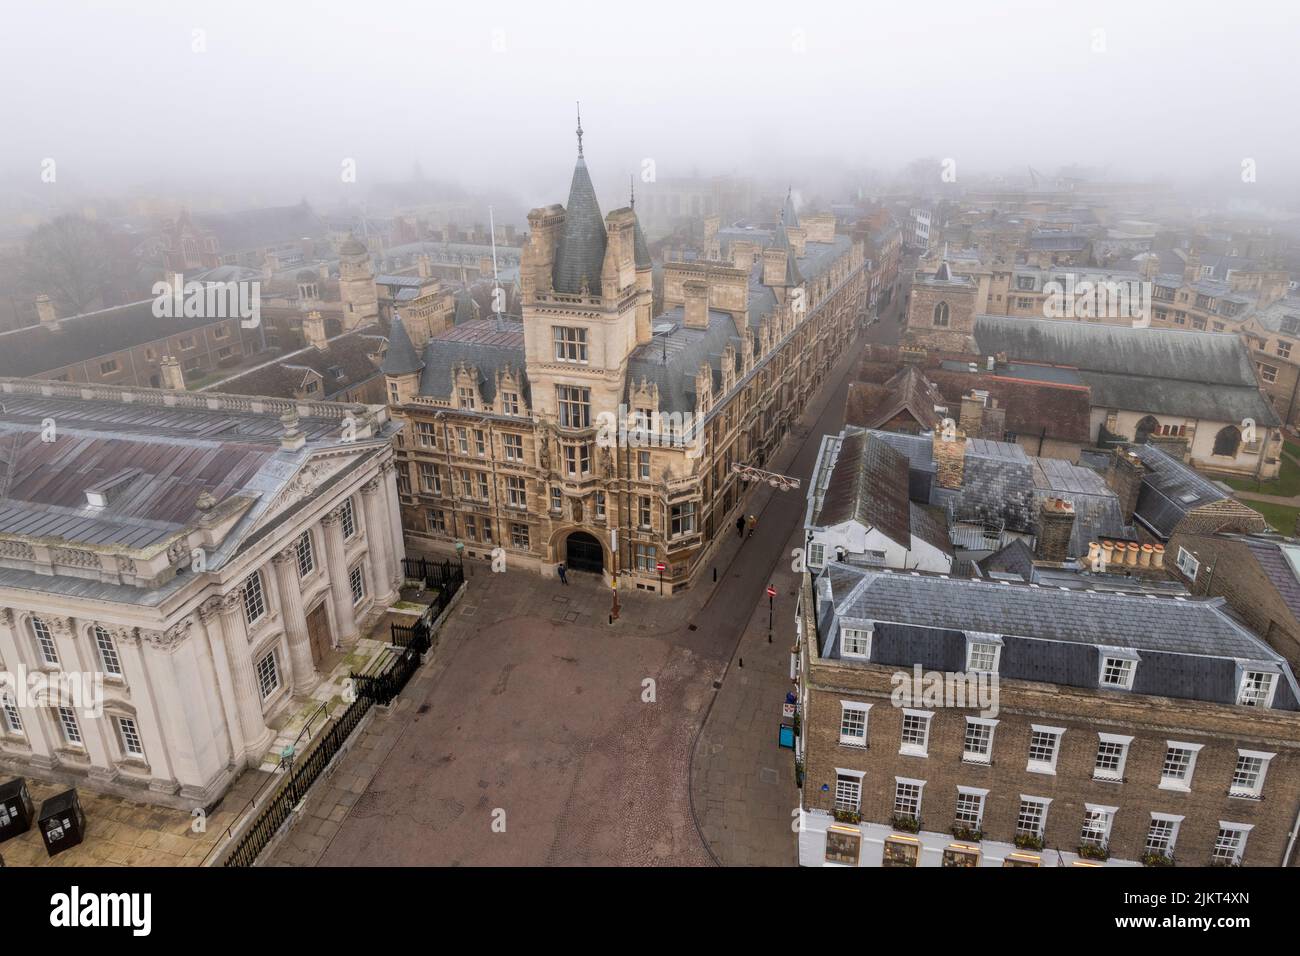 UK, England, Cambridge, University of Cambridge, Gonville and Caius College, Senate House on left Stock Photo